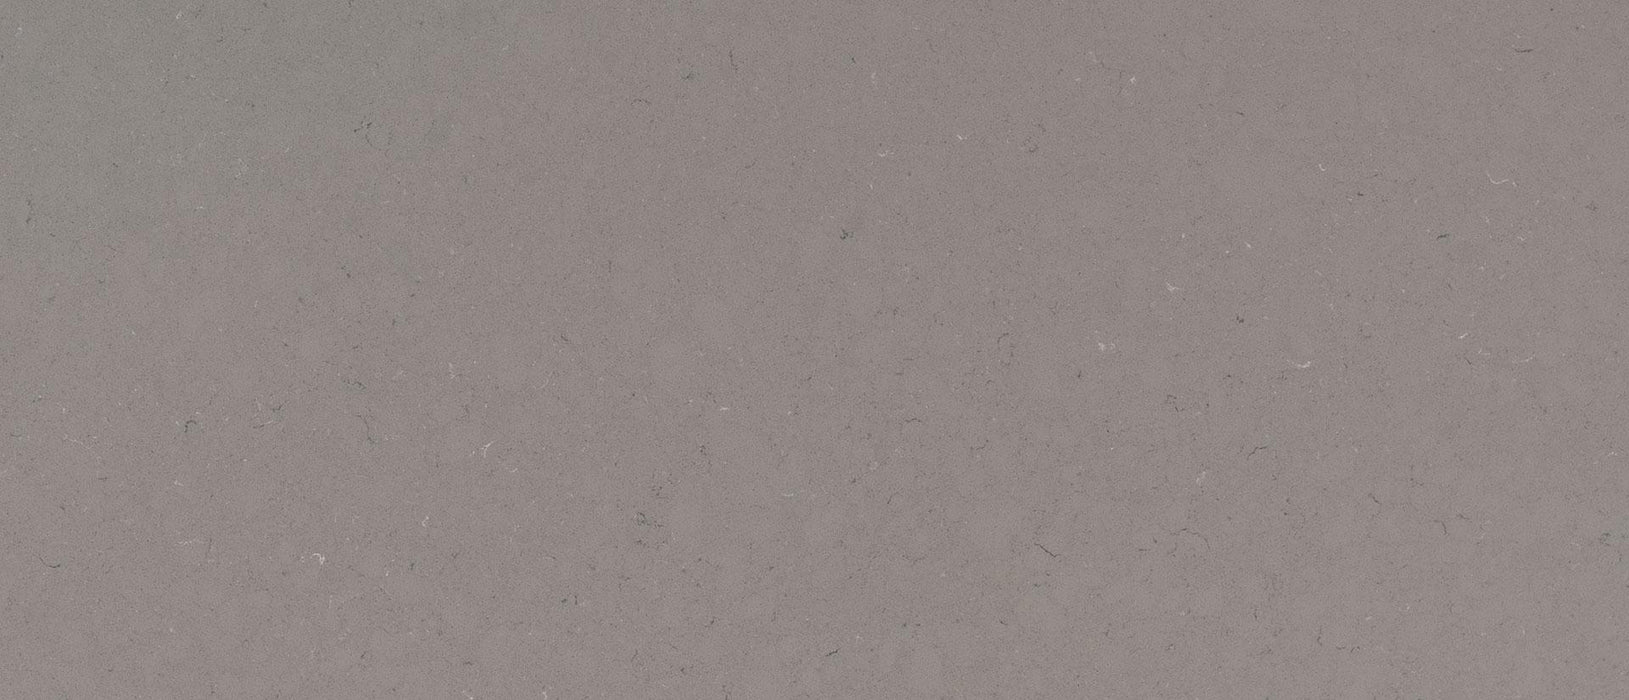 Fossil Gray 126x63 2 cm Polished Quartz Slab